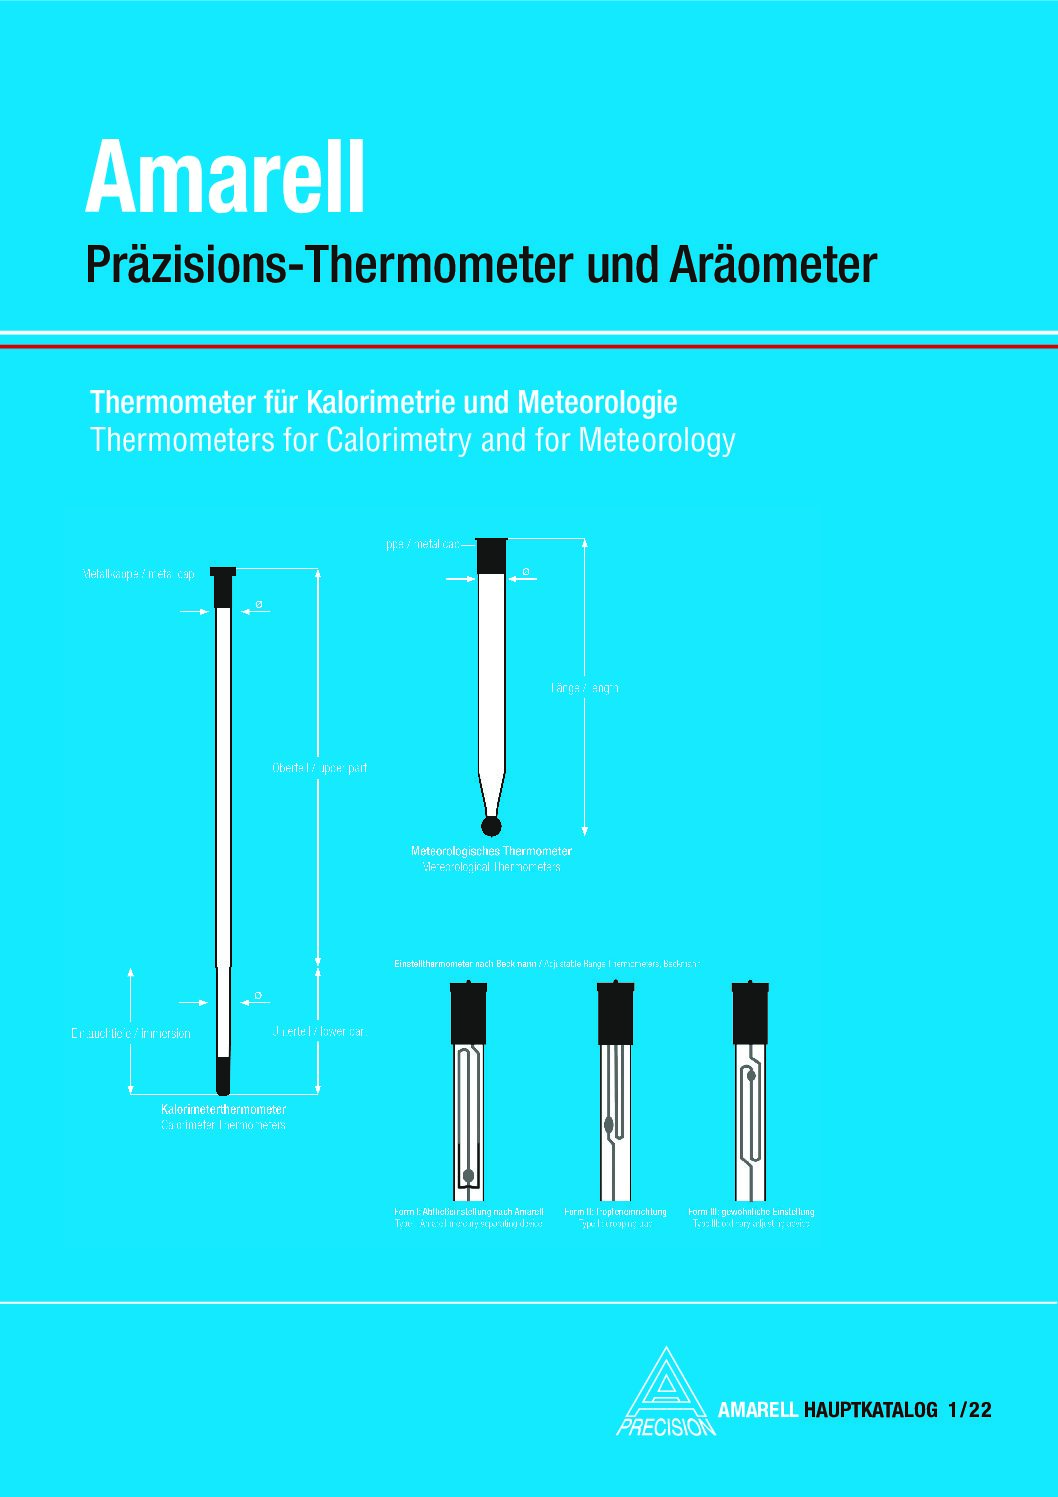 Amarell_Catalogo_Termometri 6 Calorimetria-Metereologia